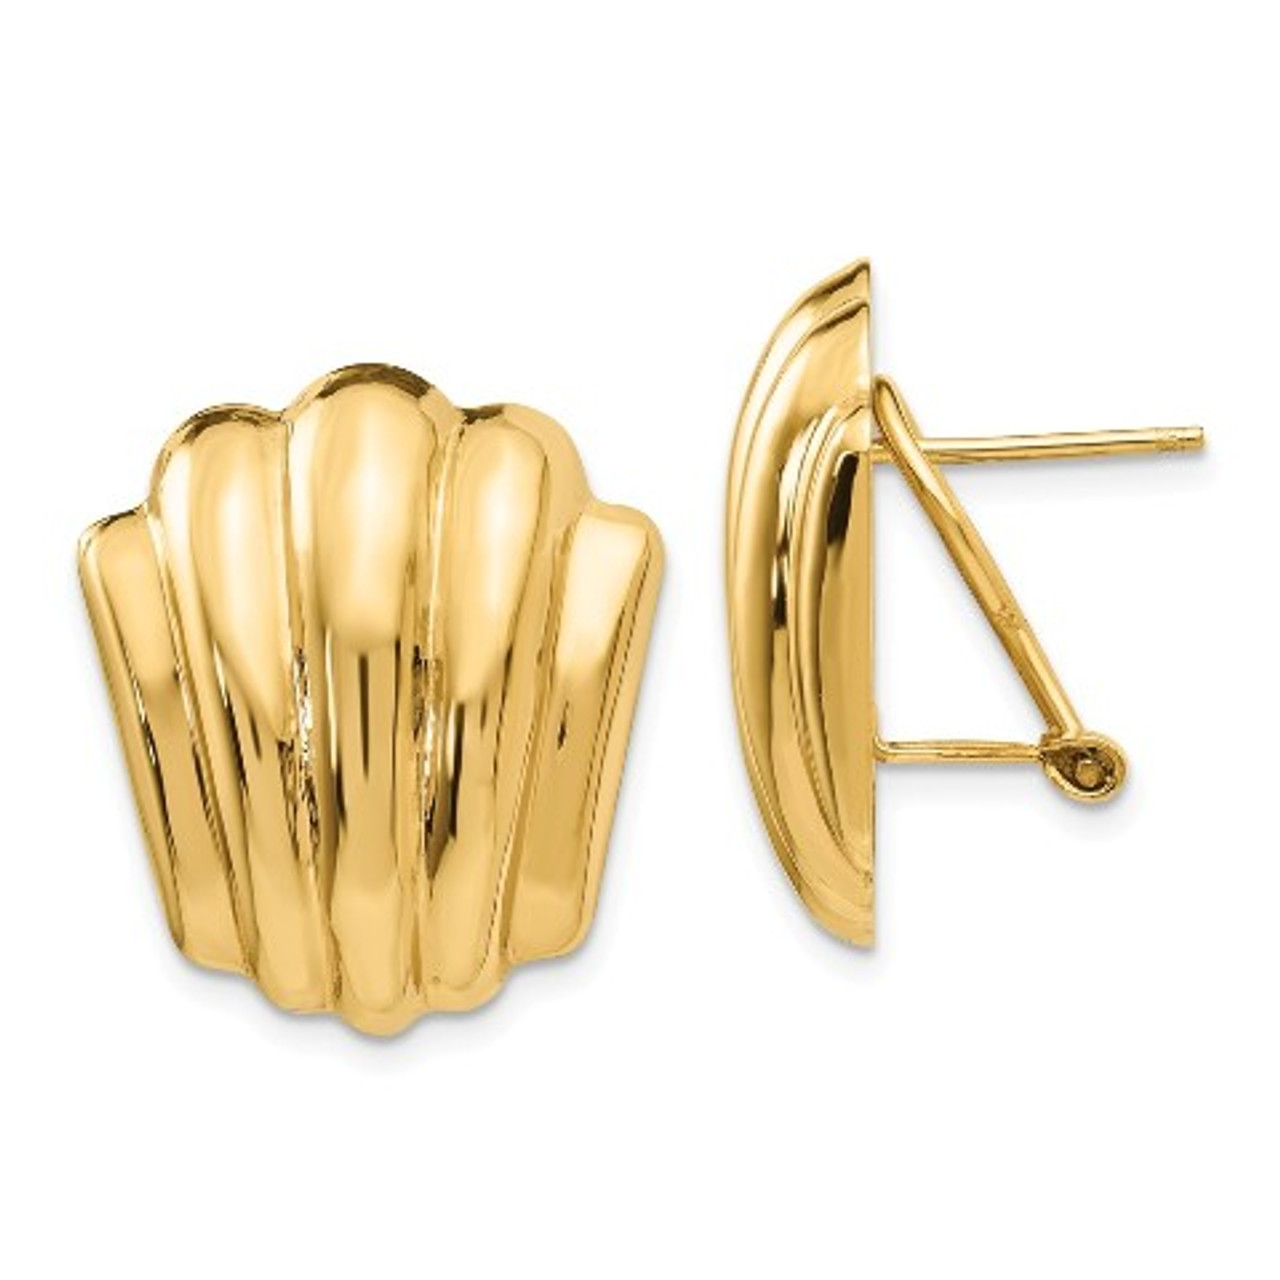 14K Gold Silicone Mushroom Screw Backs for Post Earrings, Pair (Set of 2)